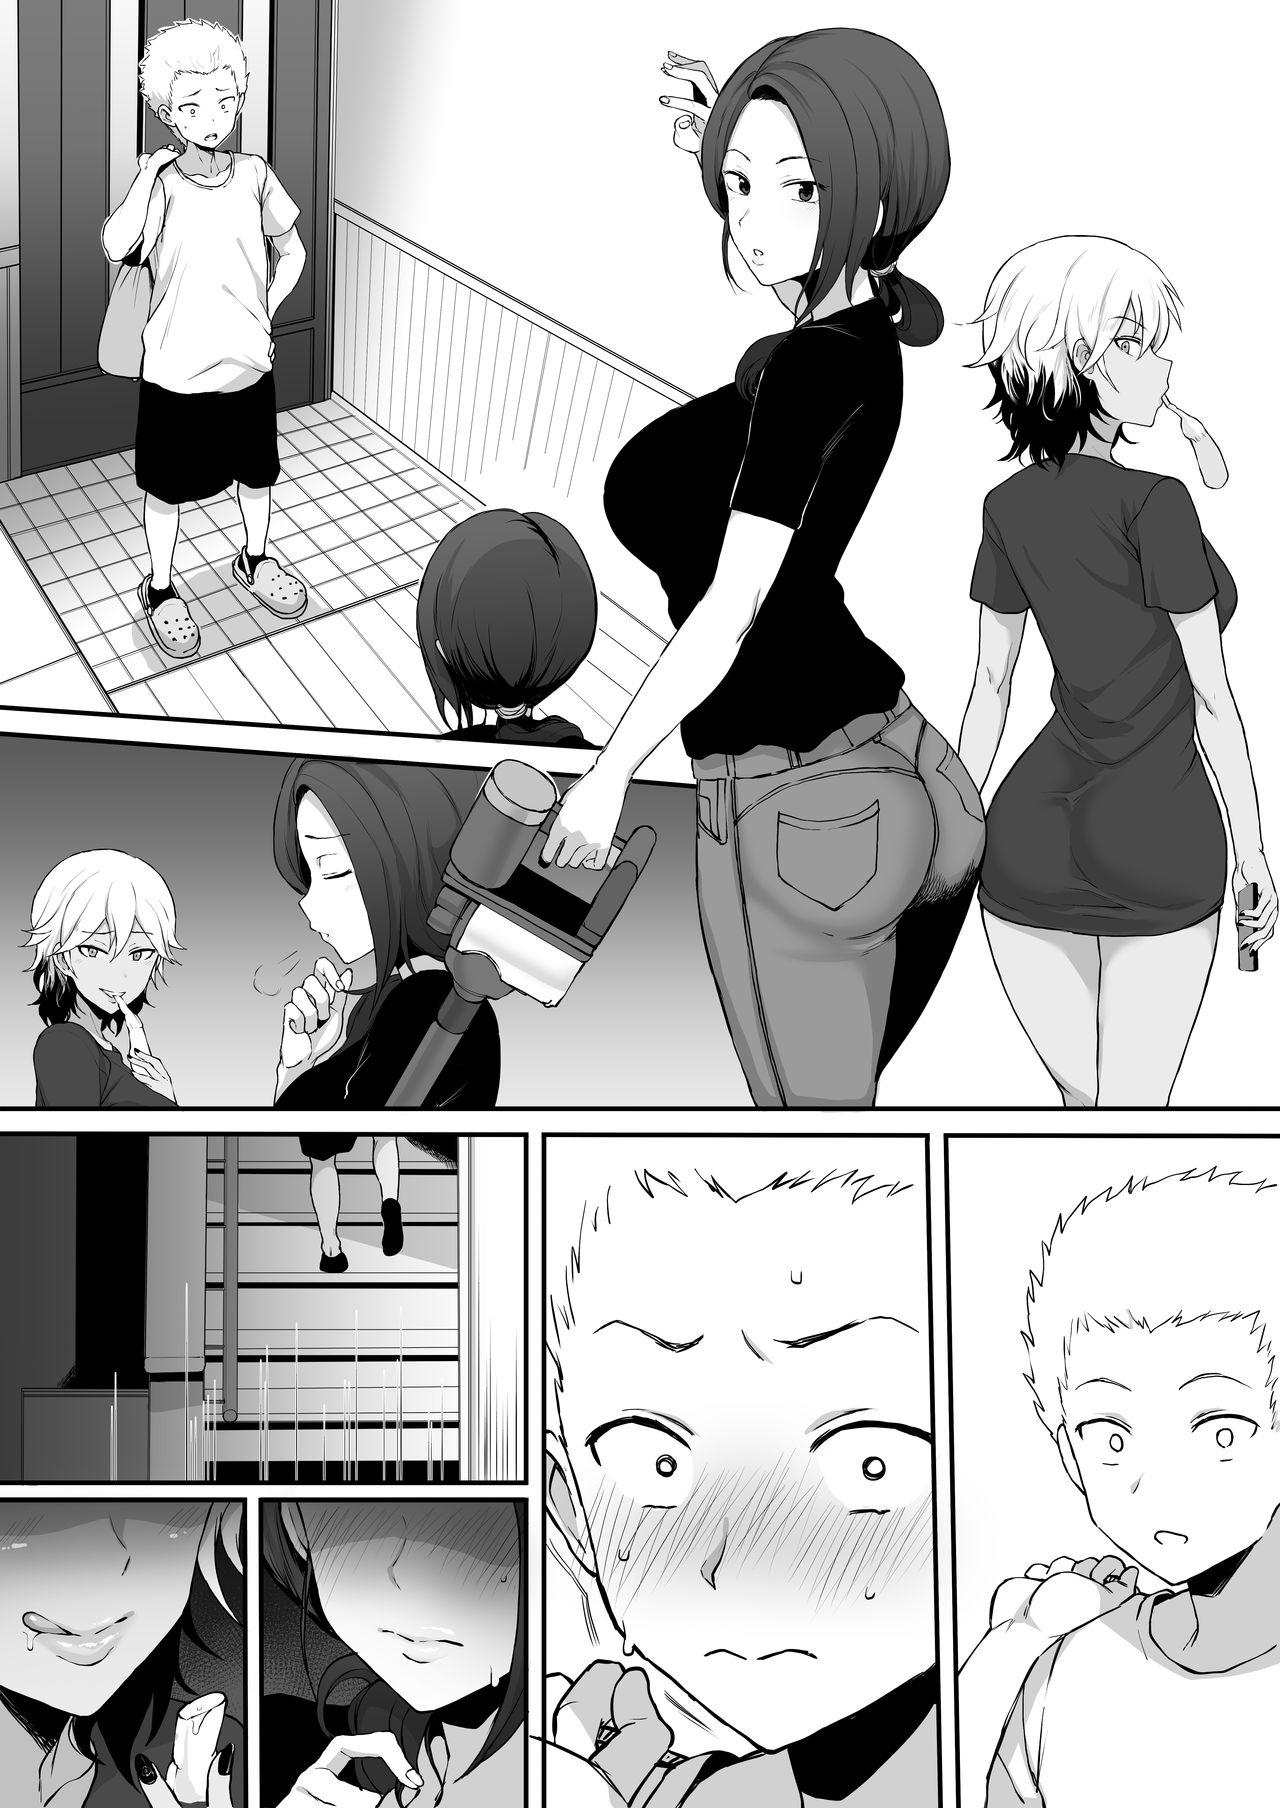 Kokujin no Tenkousei NTR ru Chapters 1-6 part 1 Plus Bonus chapter: Stolen Mother’s Breasts 31